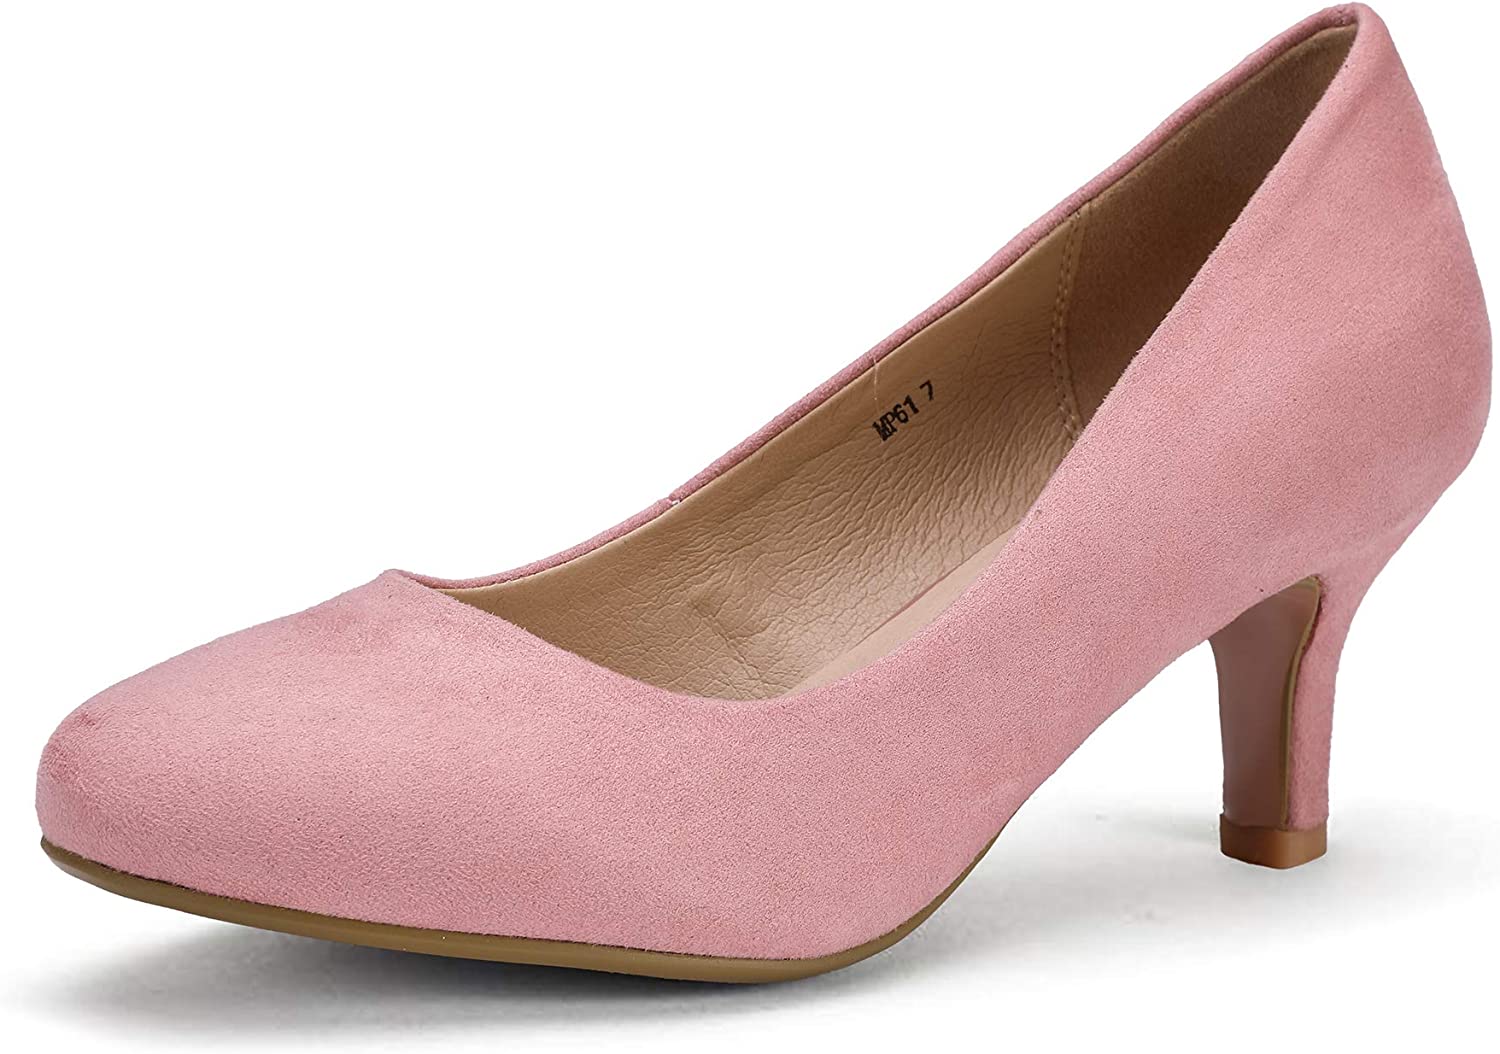 IDIFU Women's Classic Low Heels Dress Pumps 2 Inch Kitten Heel Round Toe Office Wedding Shoes 